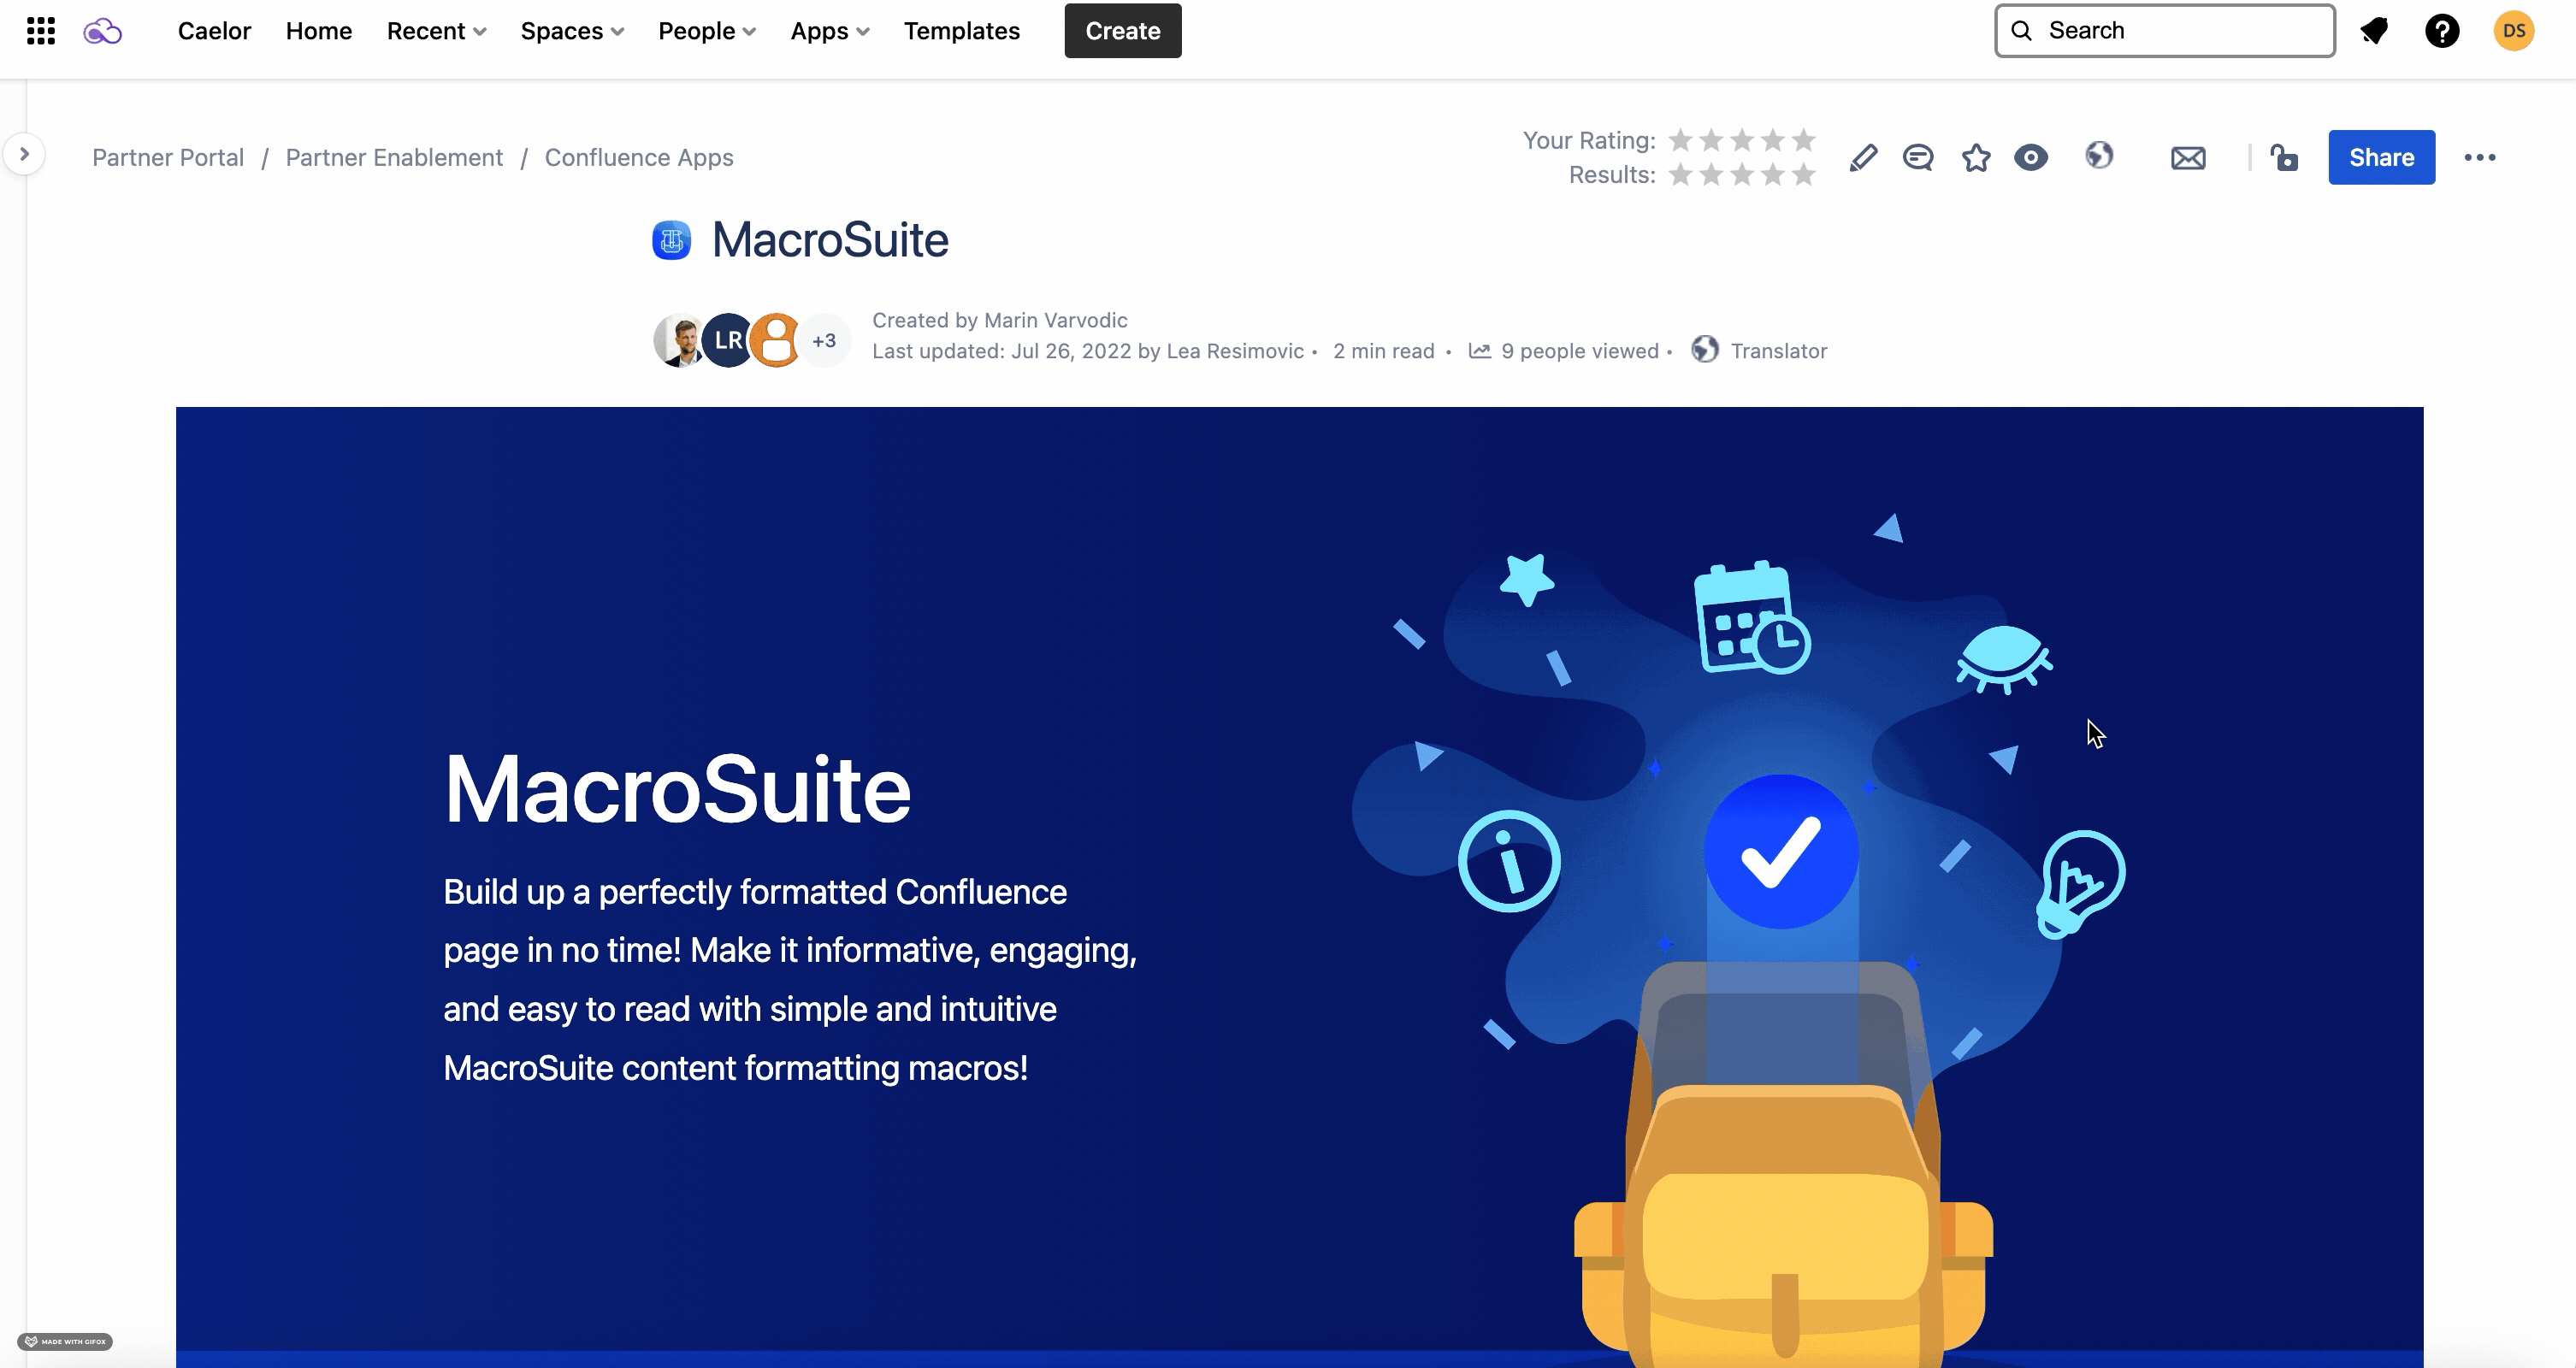 MacroSuite page Partner Portal